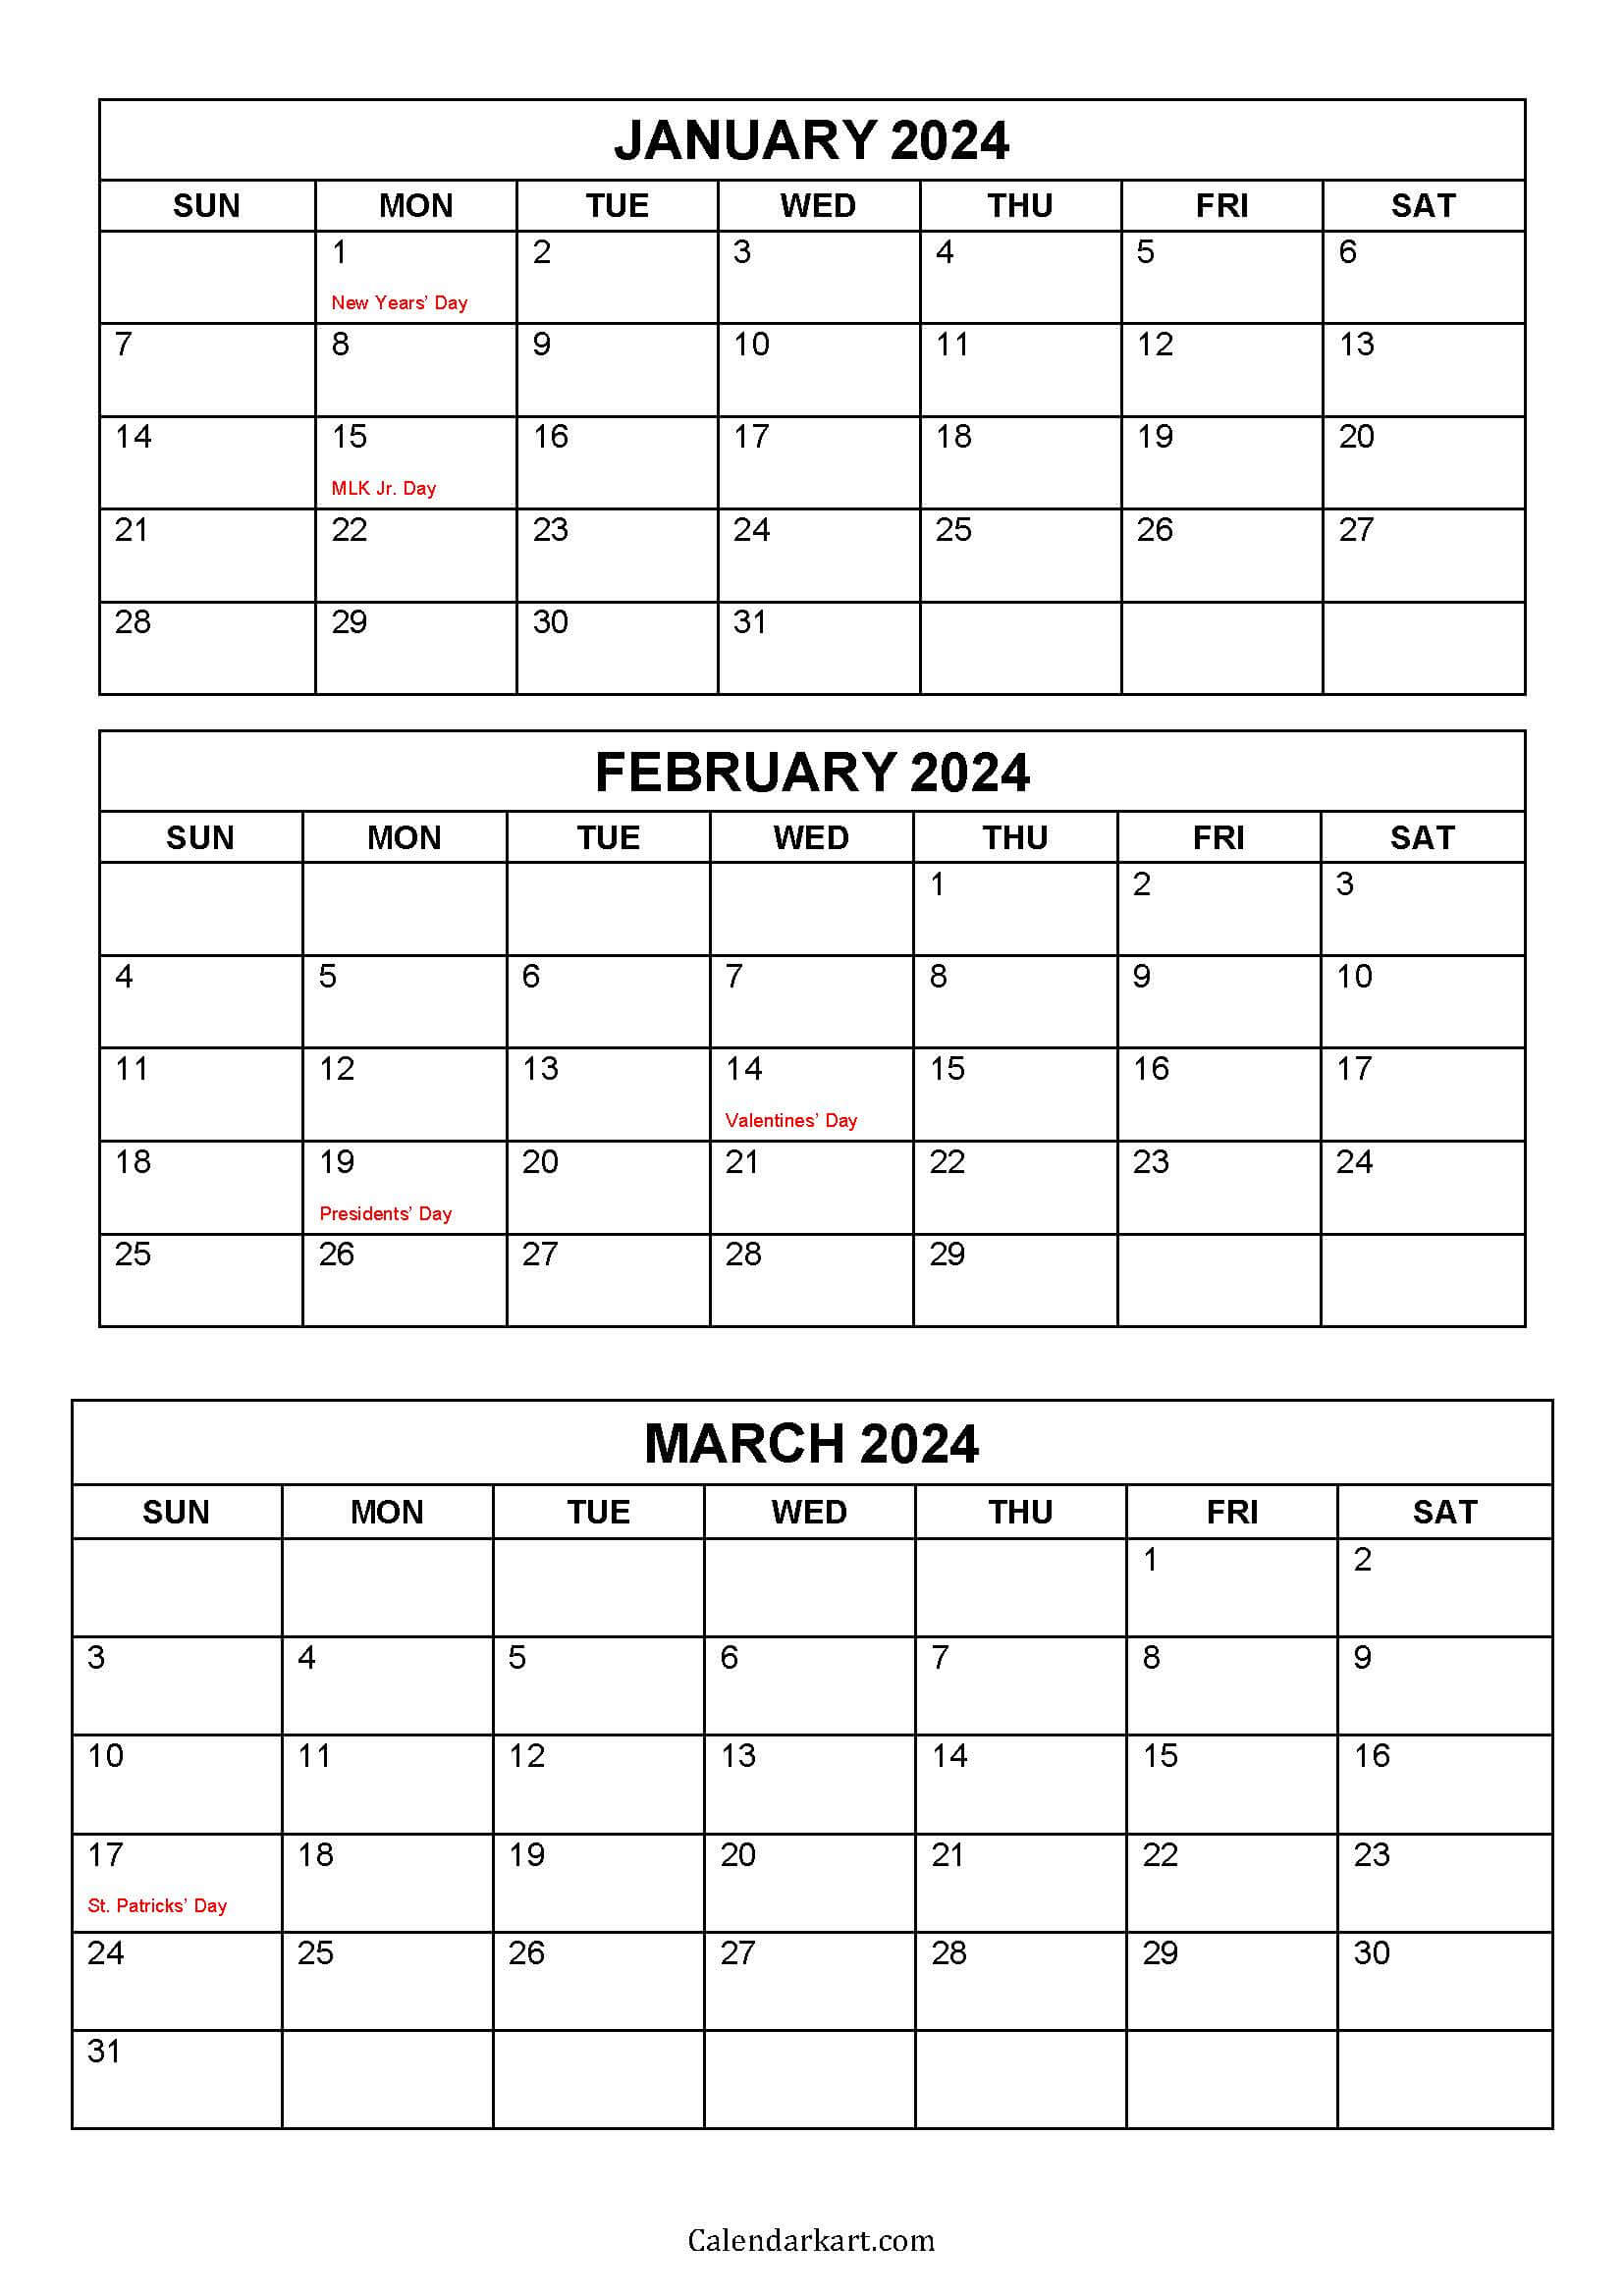 Free Printable January To March 2024 Calendar - Calendarkart | Printable Calendar 2024 3 Months Per Page